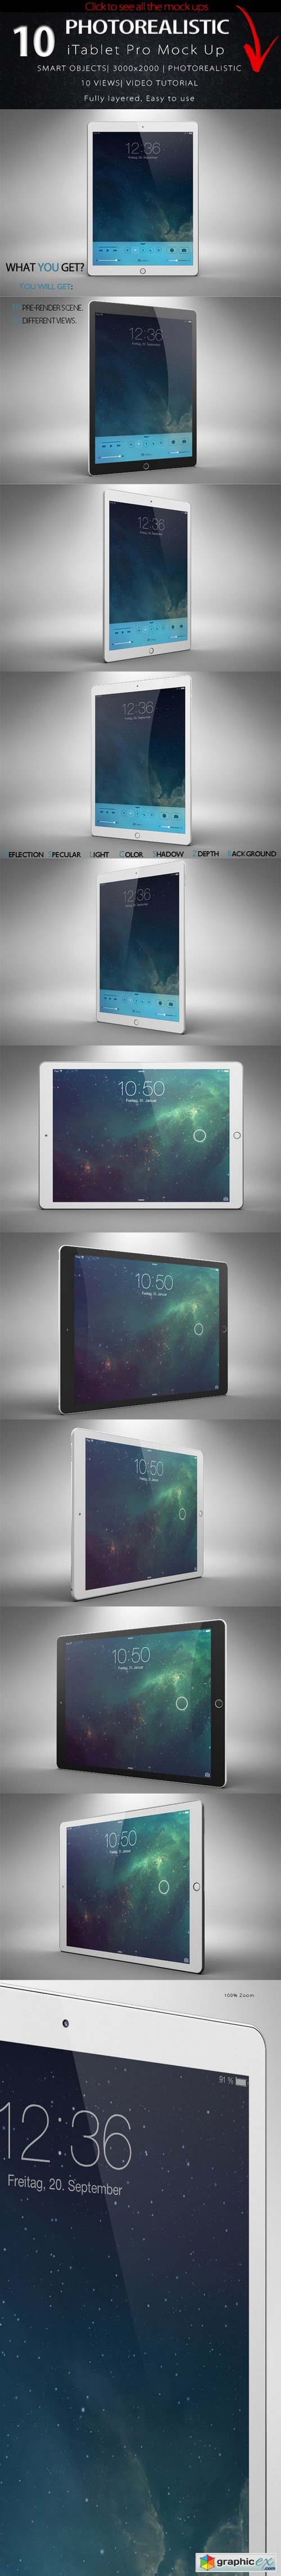 BUNDLE New iPad Pro Mock Up